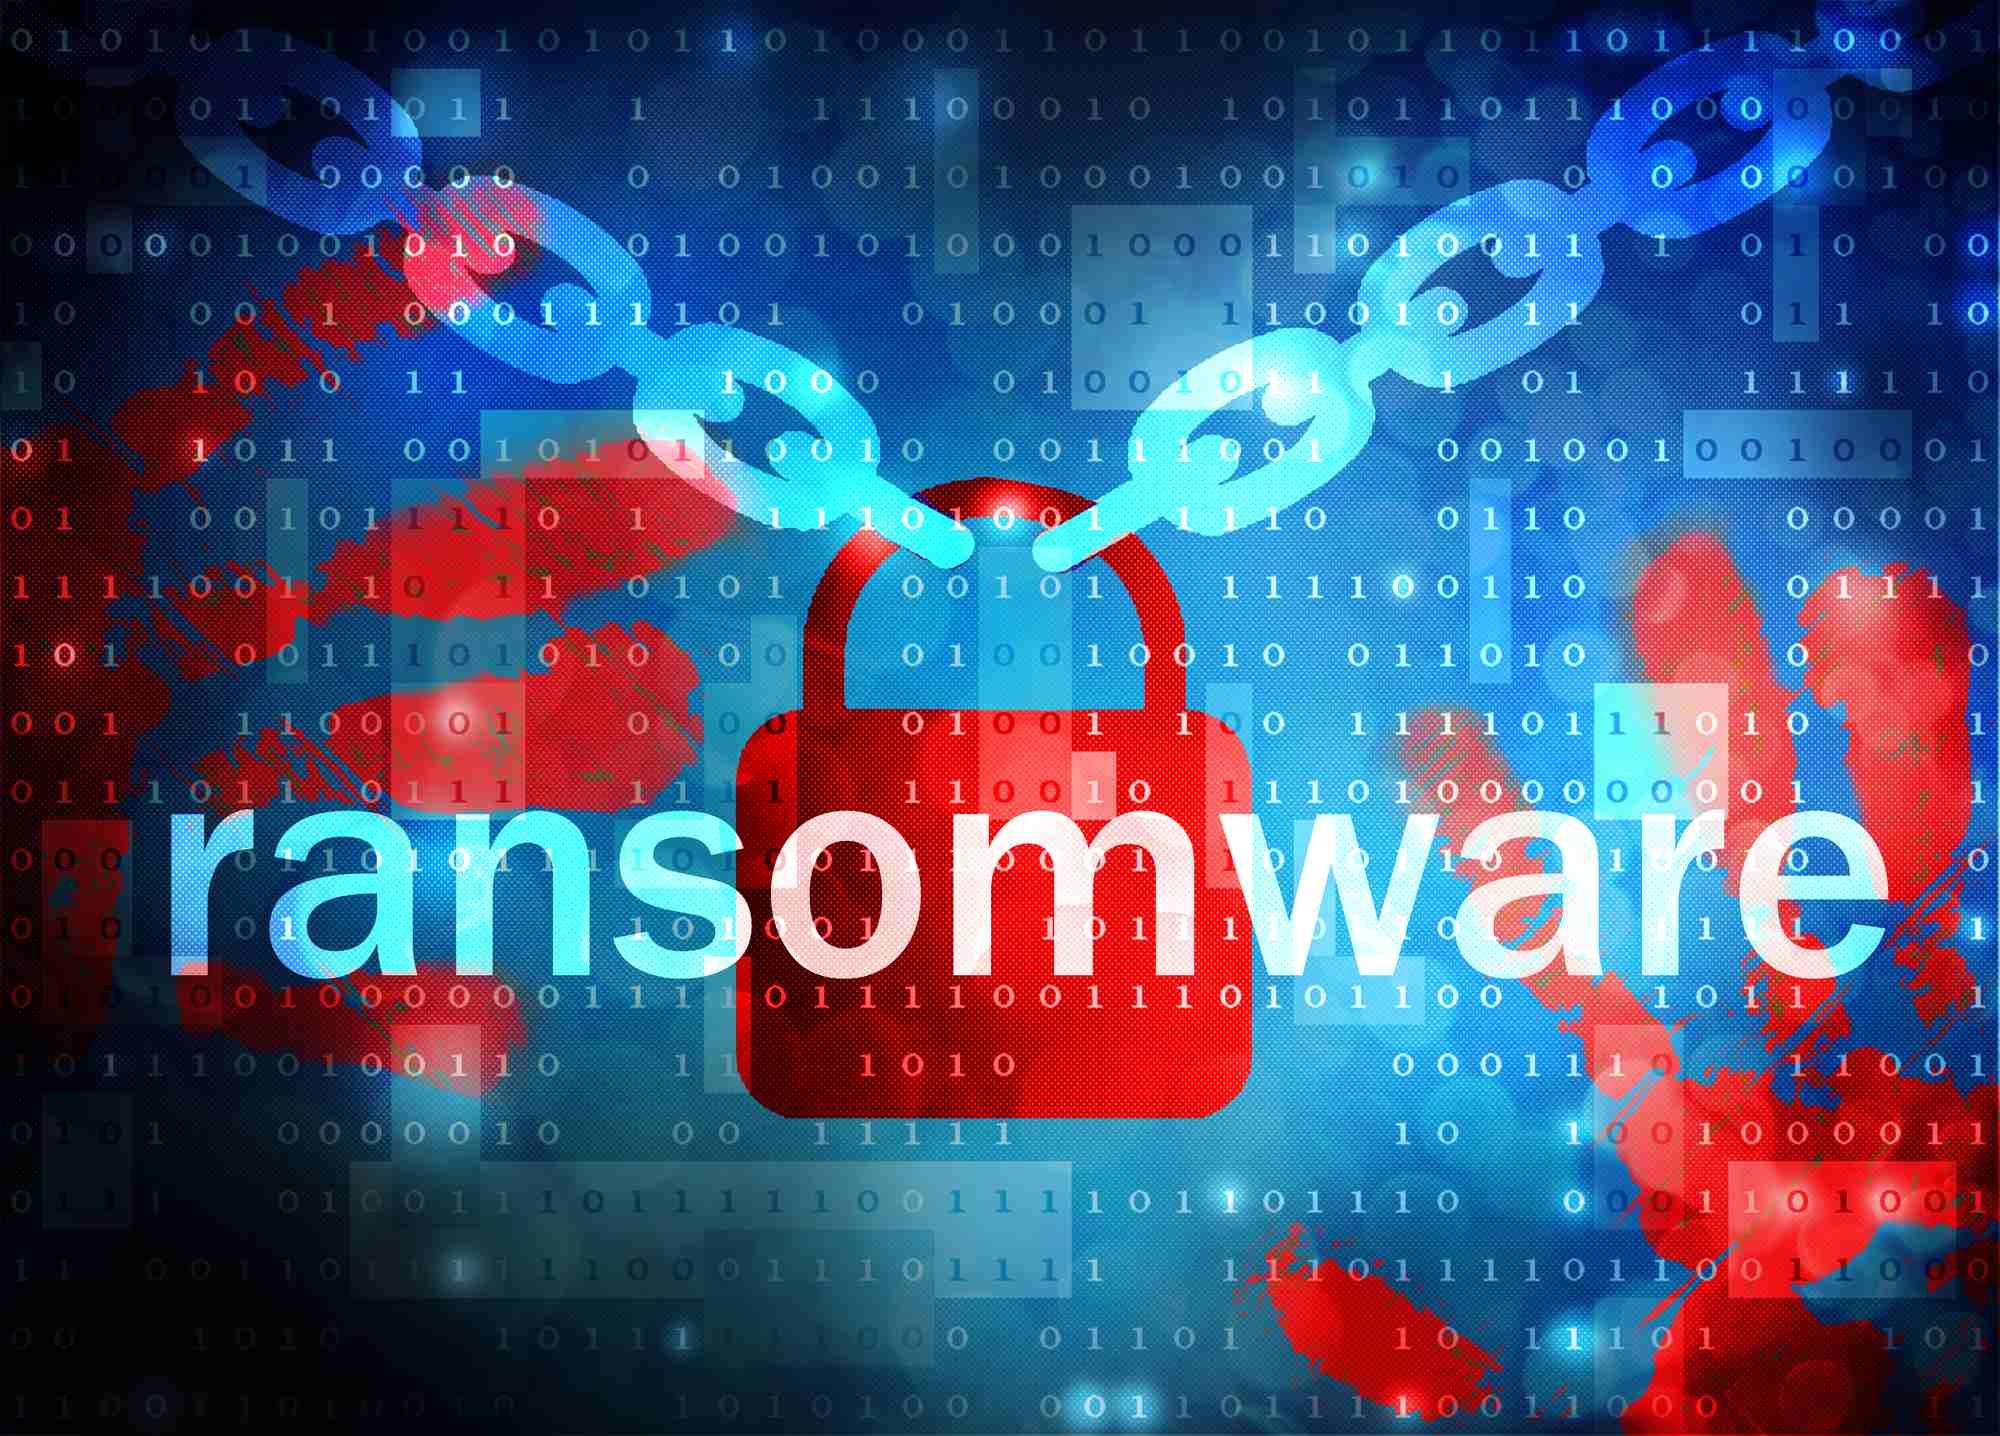 Patients may be victims of hospital ransomware attacks